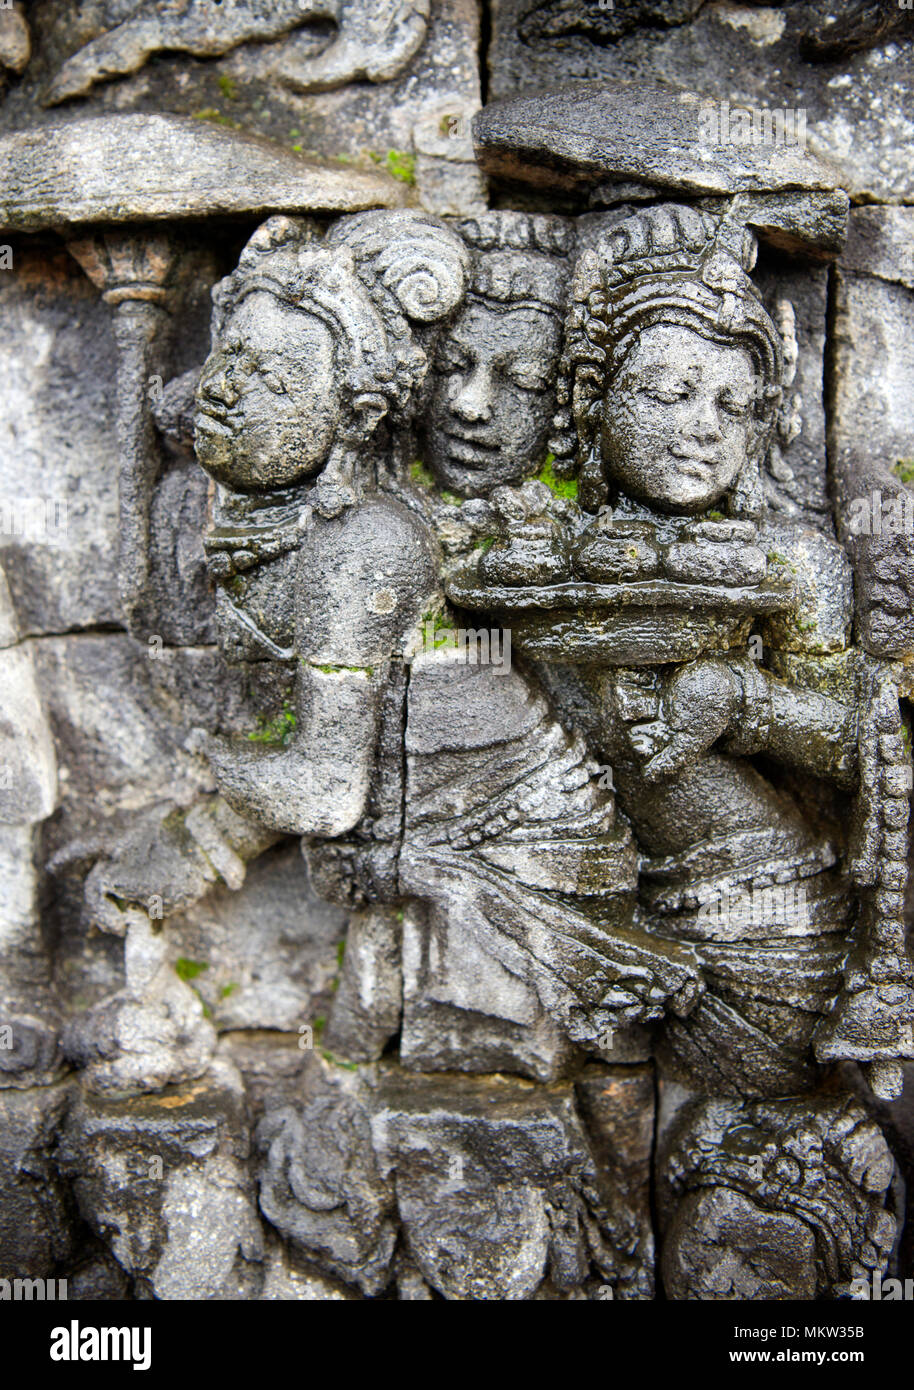 Tres figuras en bajorrelieve de piedra tallada del siglo ix templo Budista Borobudur Java Indonesia Foto de stock